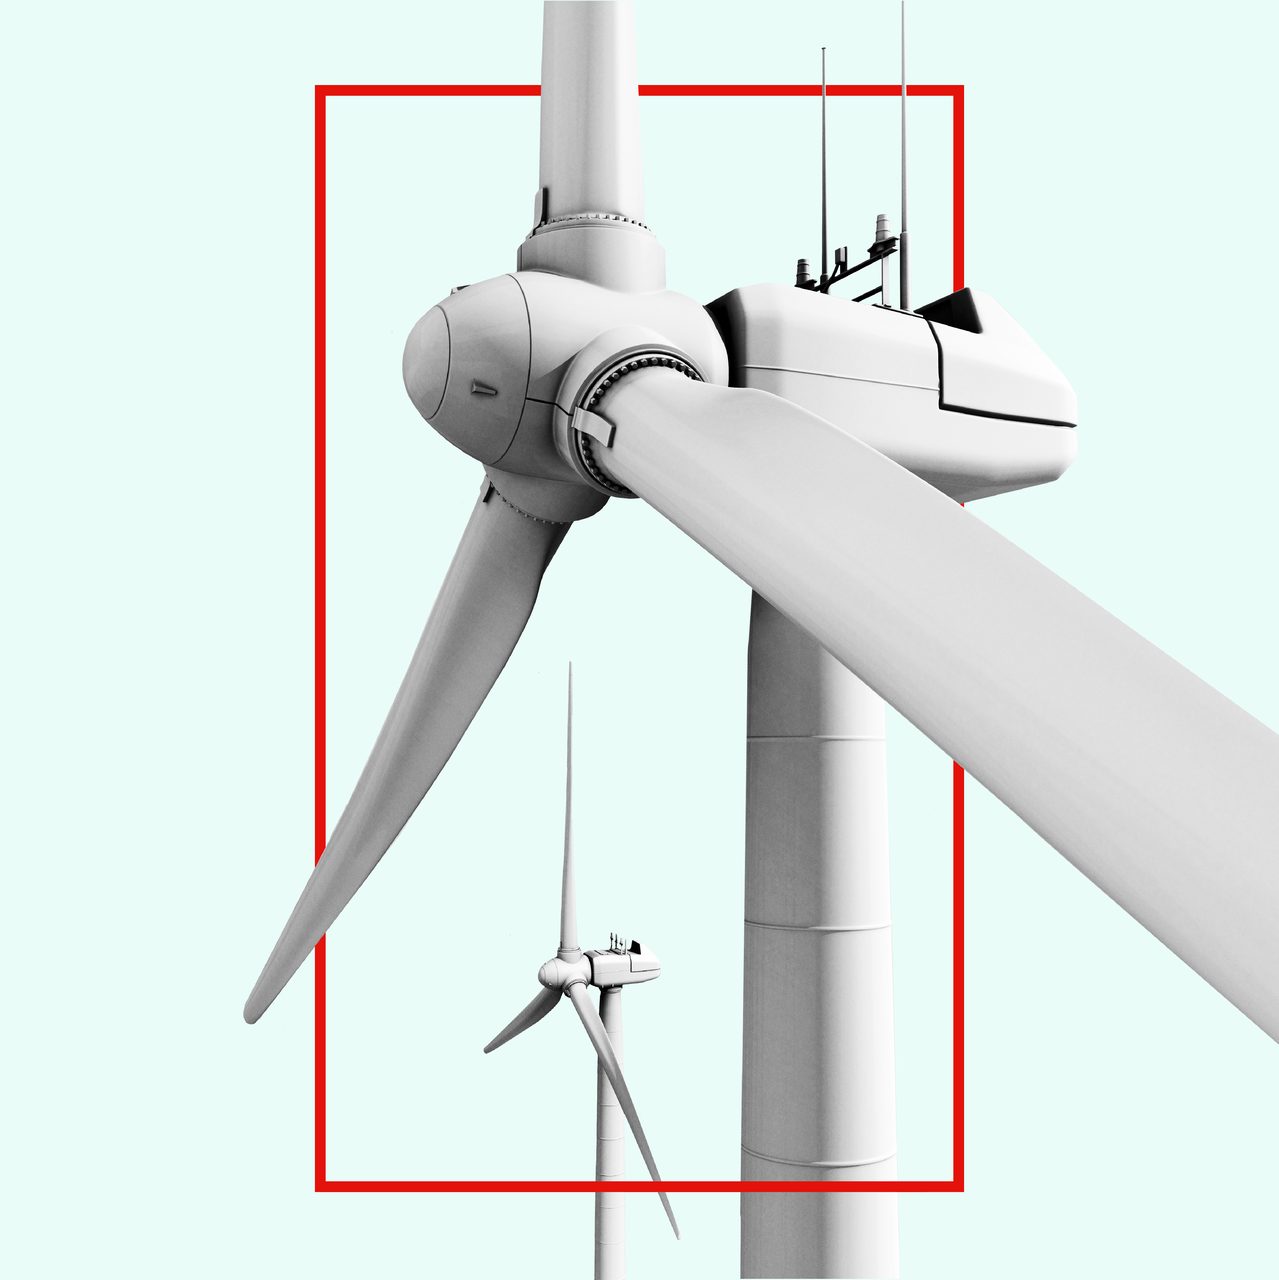 Wind turbine, White, Windmill, Aircraft, Line, Propeller